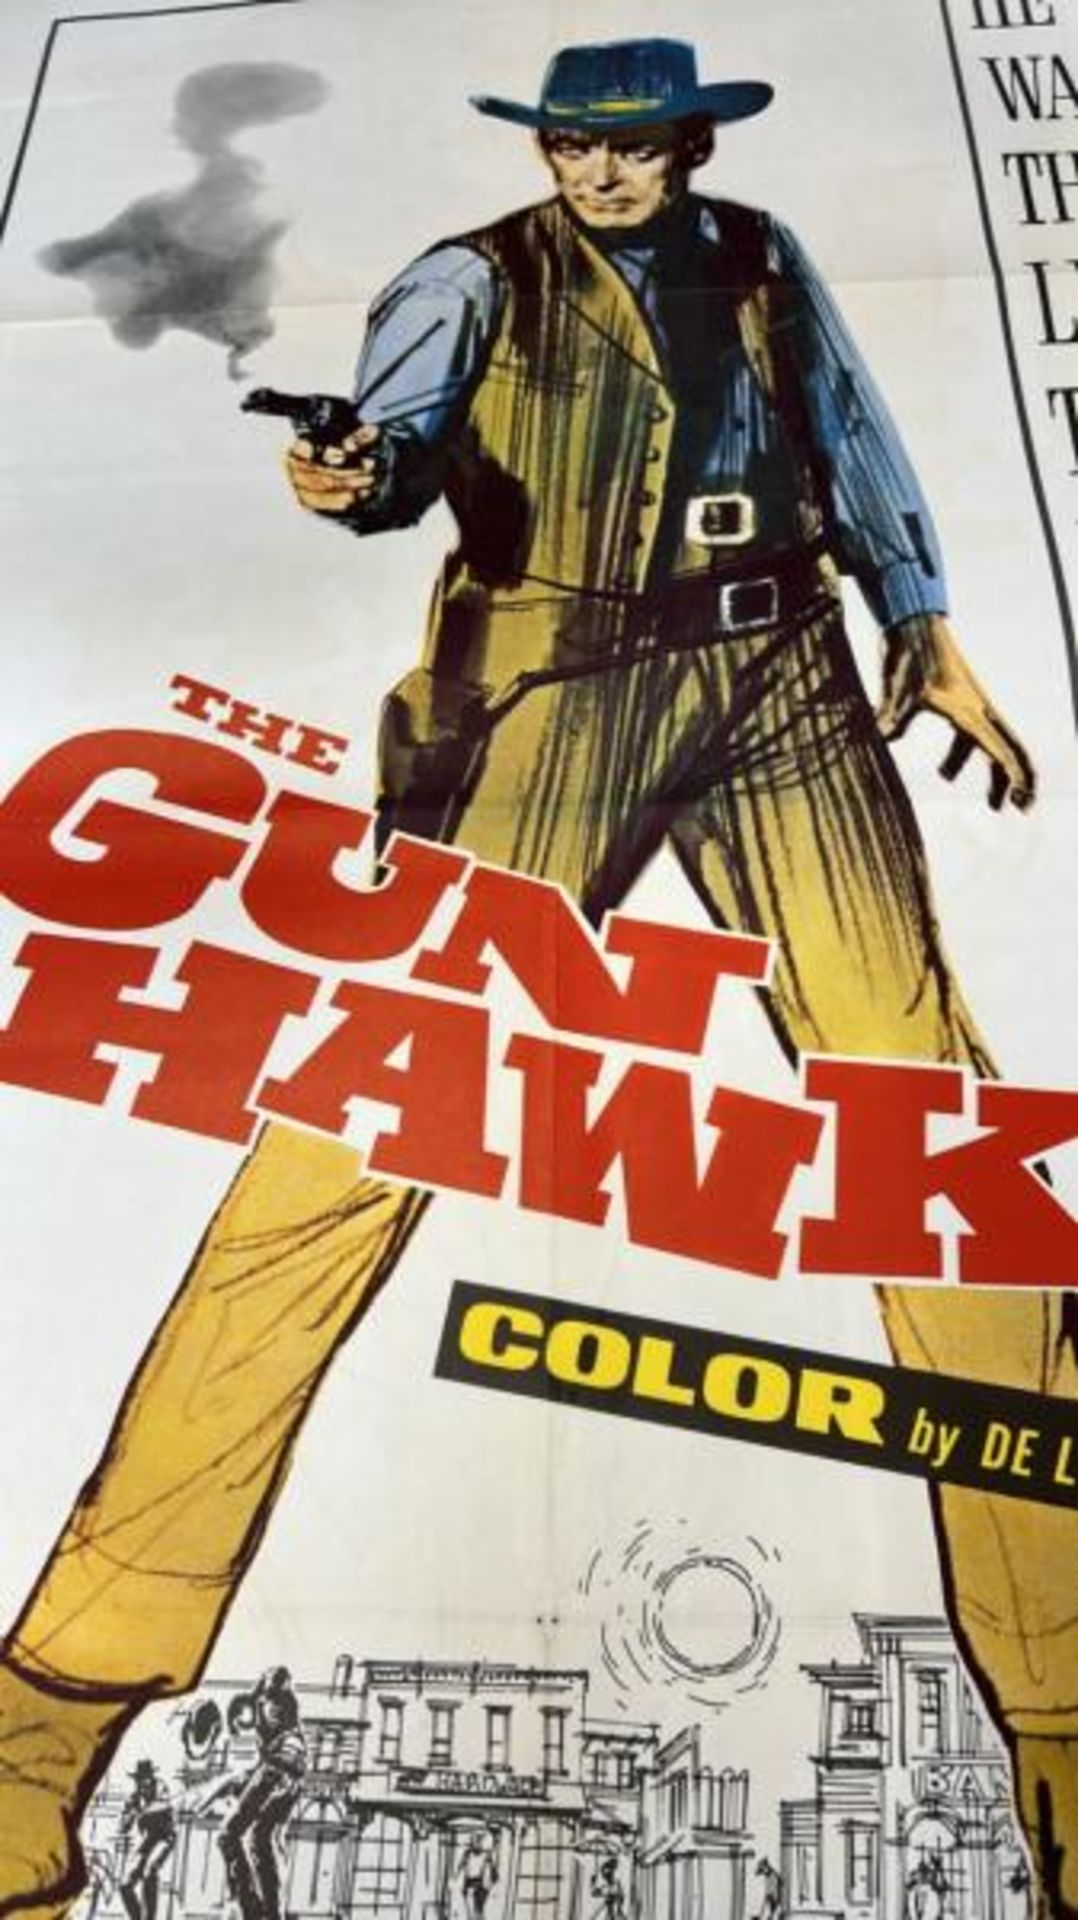 THE GUN HAWK, ORIGINAL FILM POSTER, 63/256, MADE IN THE USA, 68.5CM W X 105CM H - Image 4 of 4